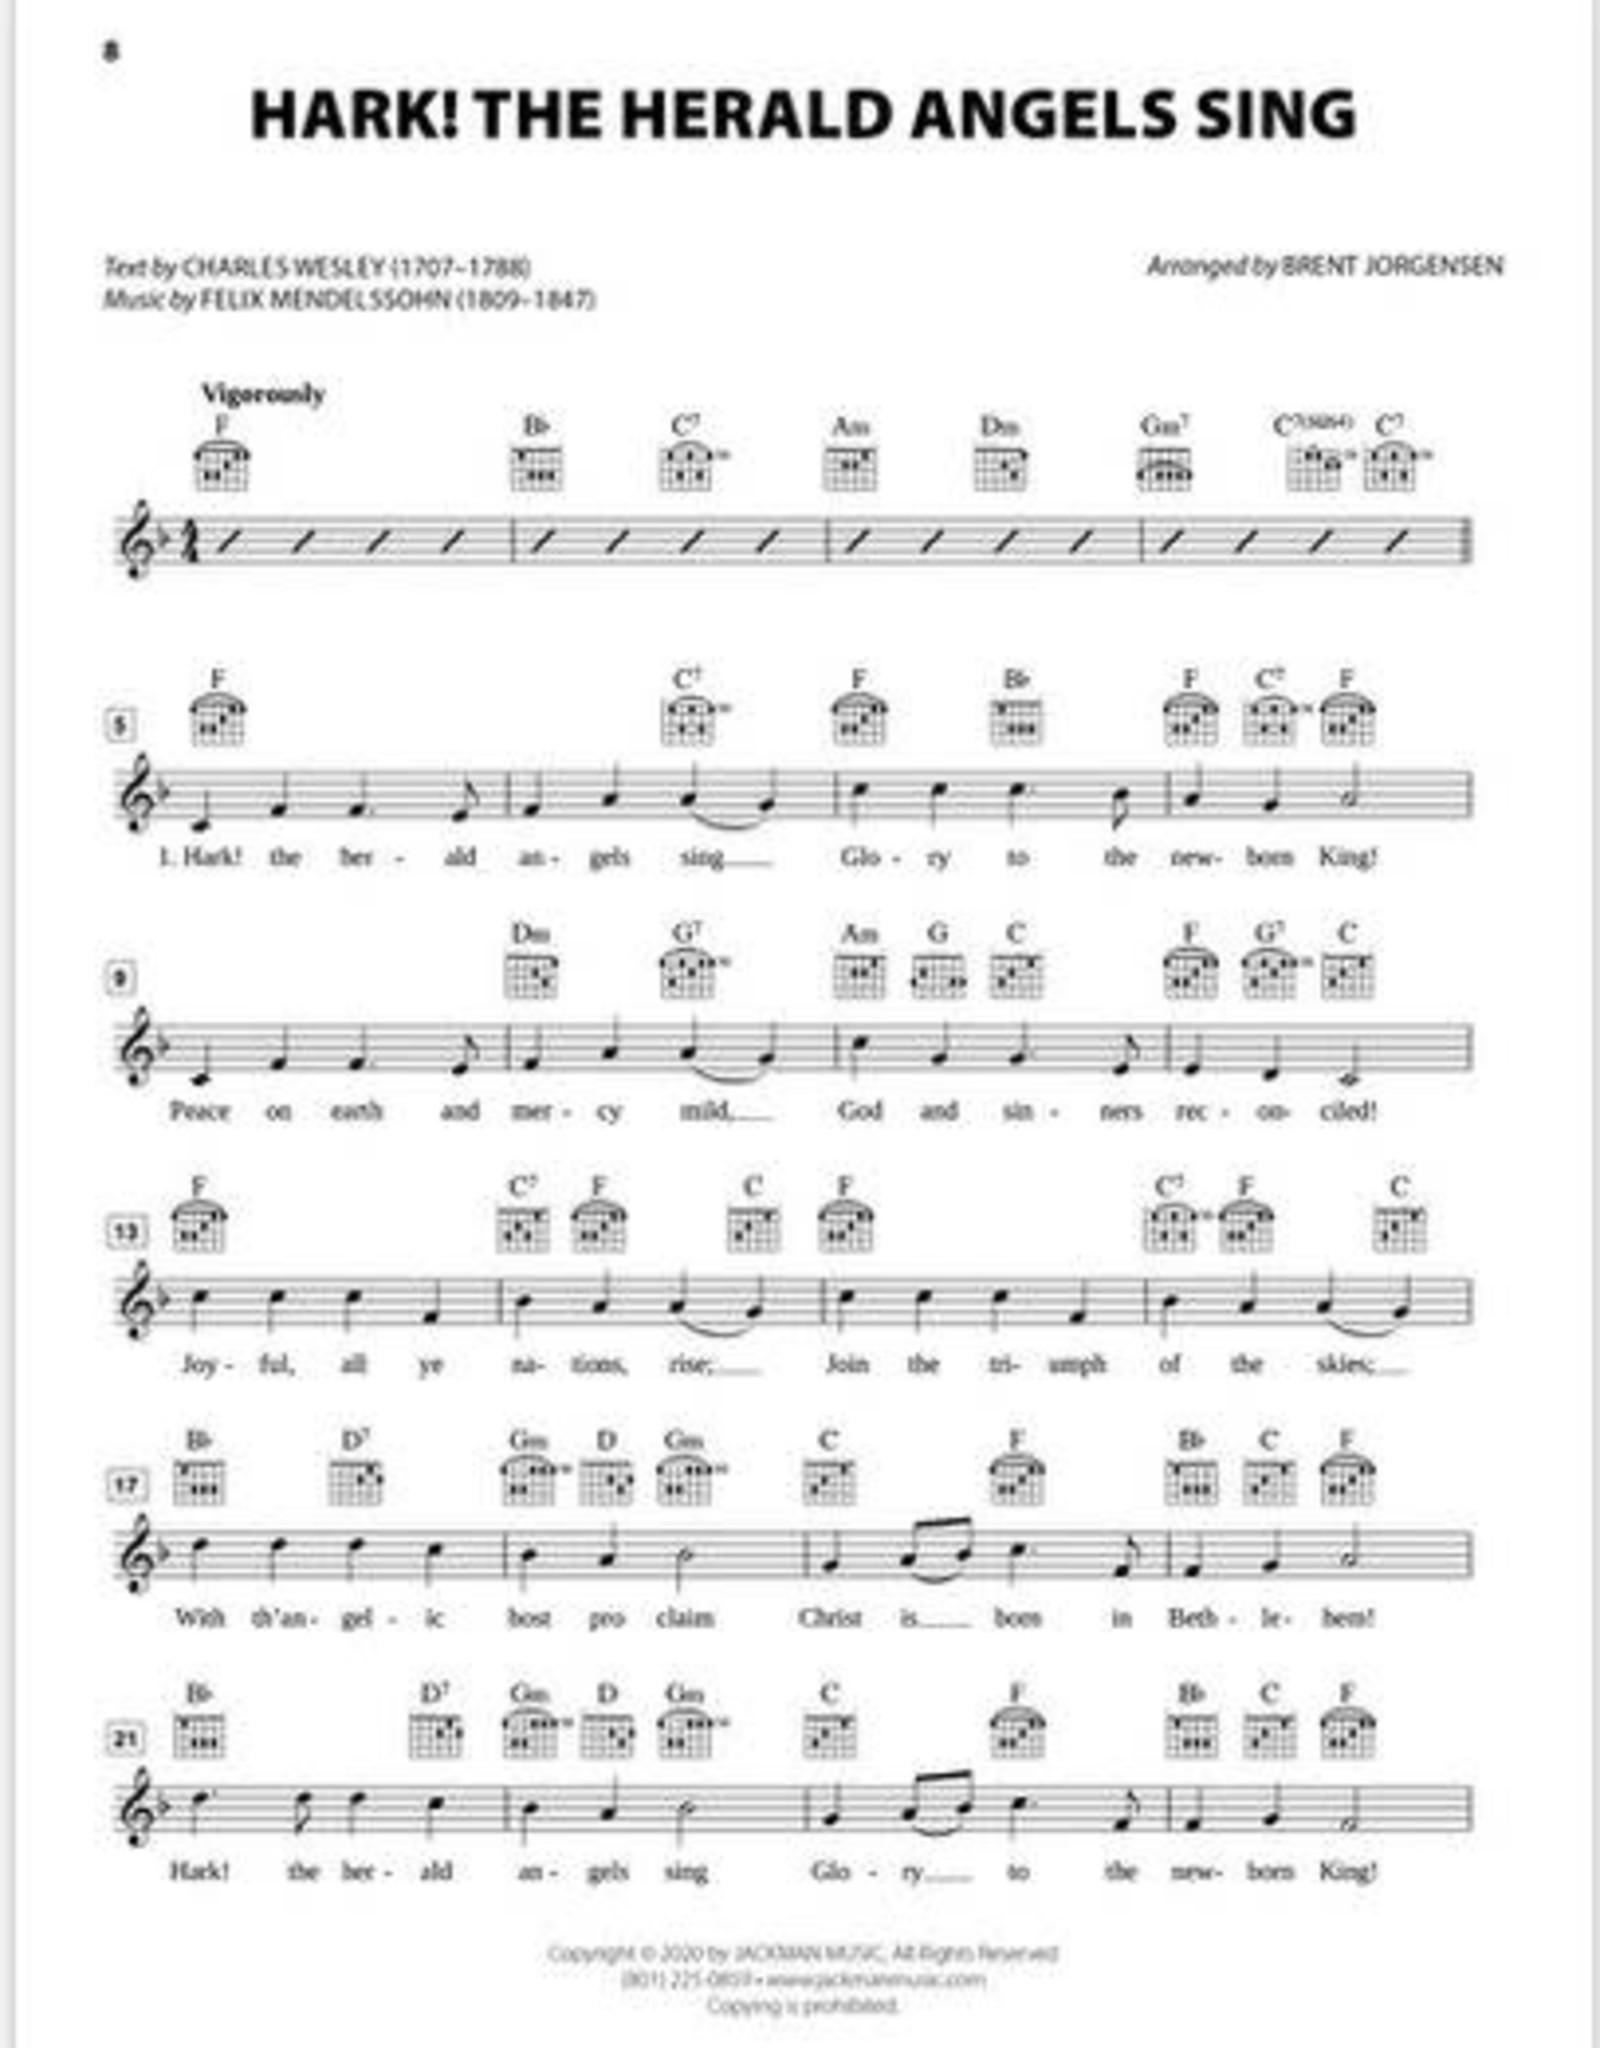 Jackman Music Christmas Hymn-Alongs - arr. Brent Jorgensen - Lead Sheets